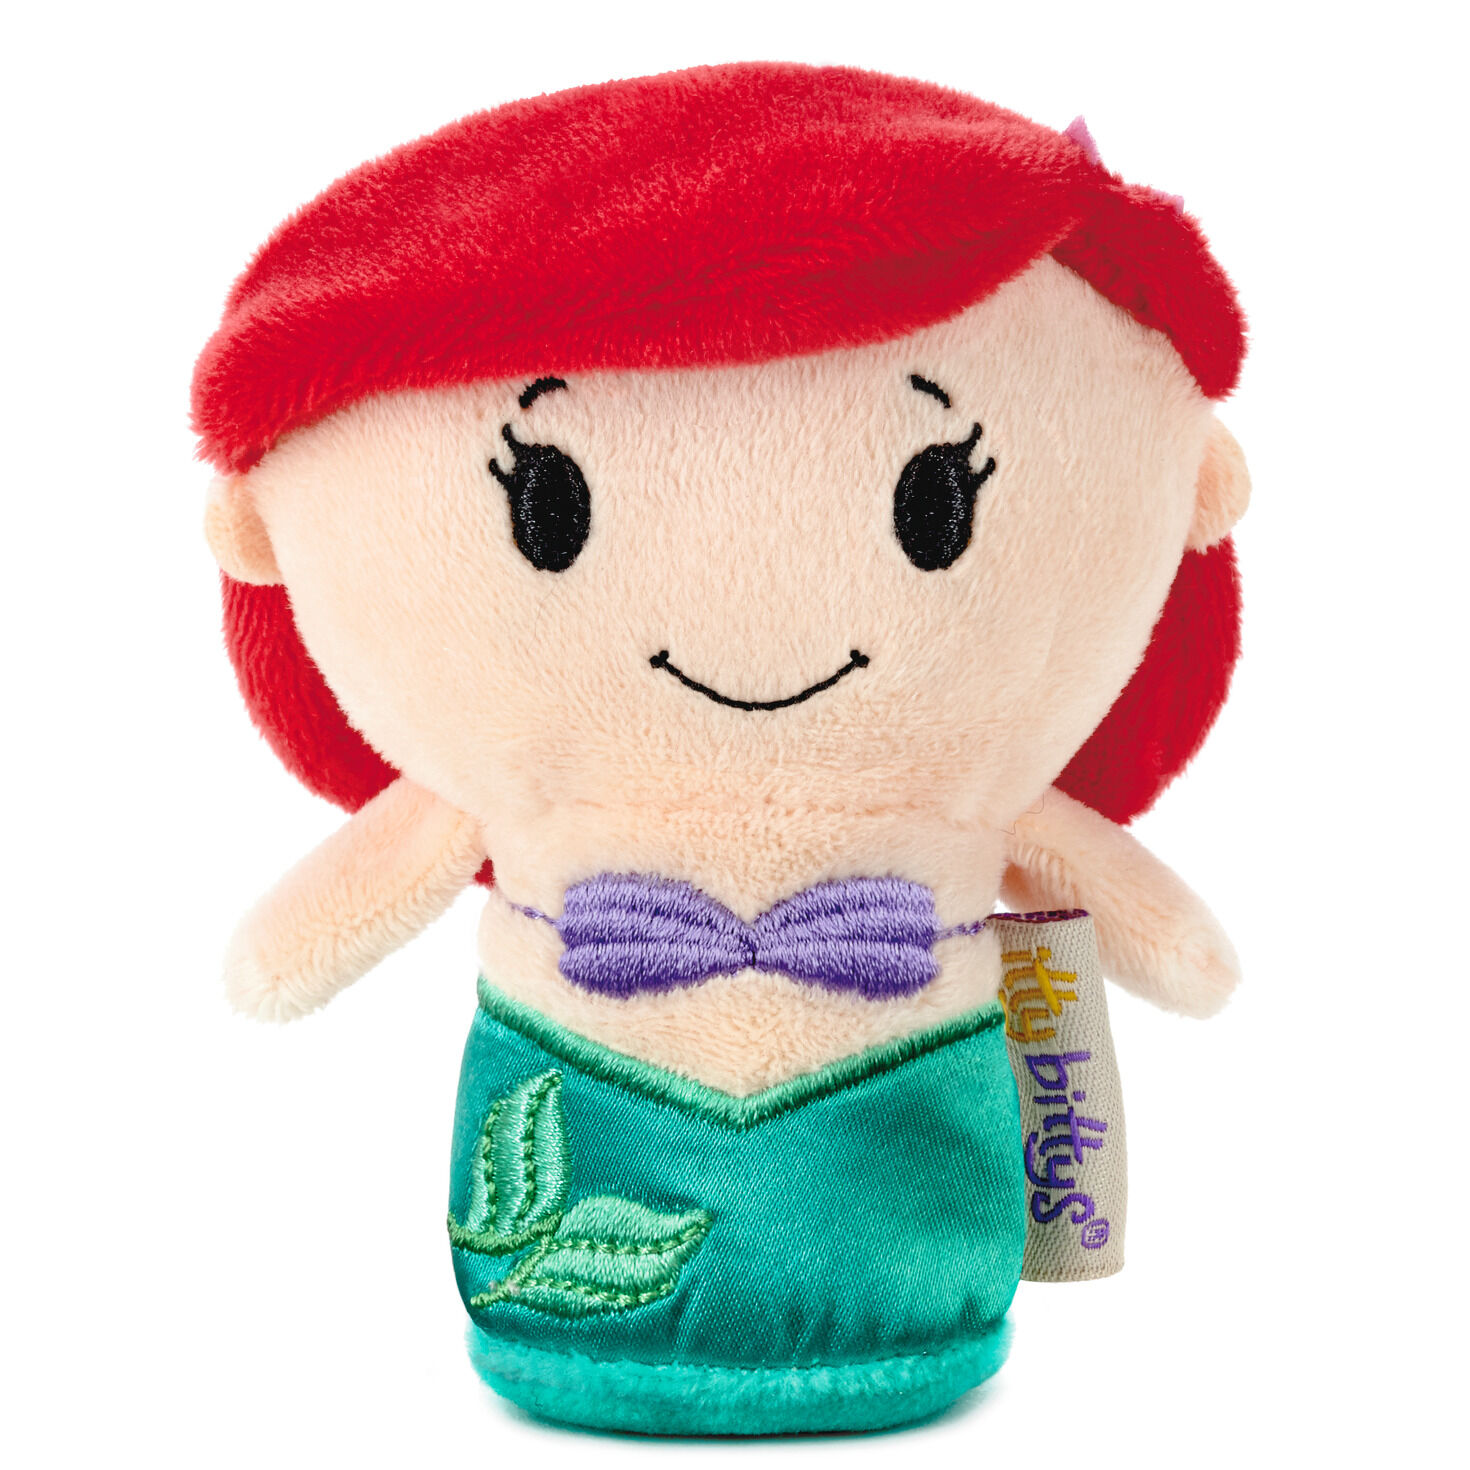 Details about   Hallmark The Little Mermaid Ariel Itty Biggy Itty Bitty Plush Stuffed Doll 4" FS 